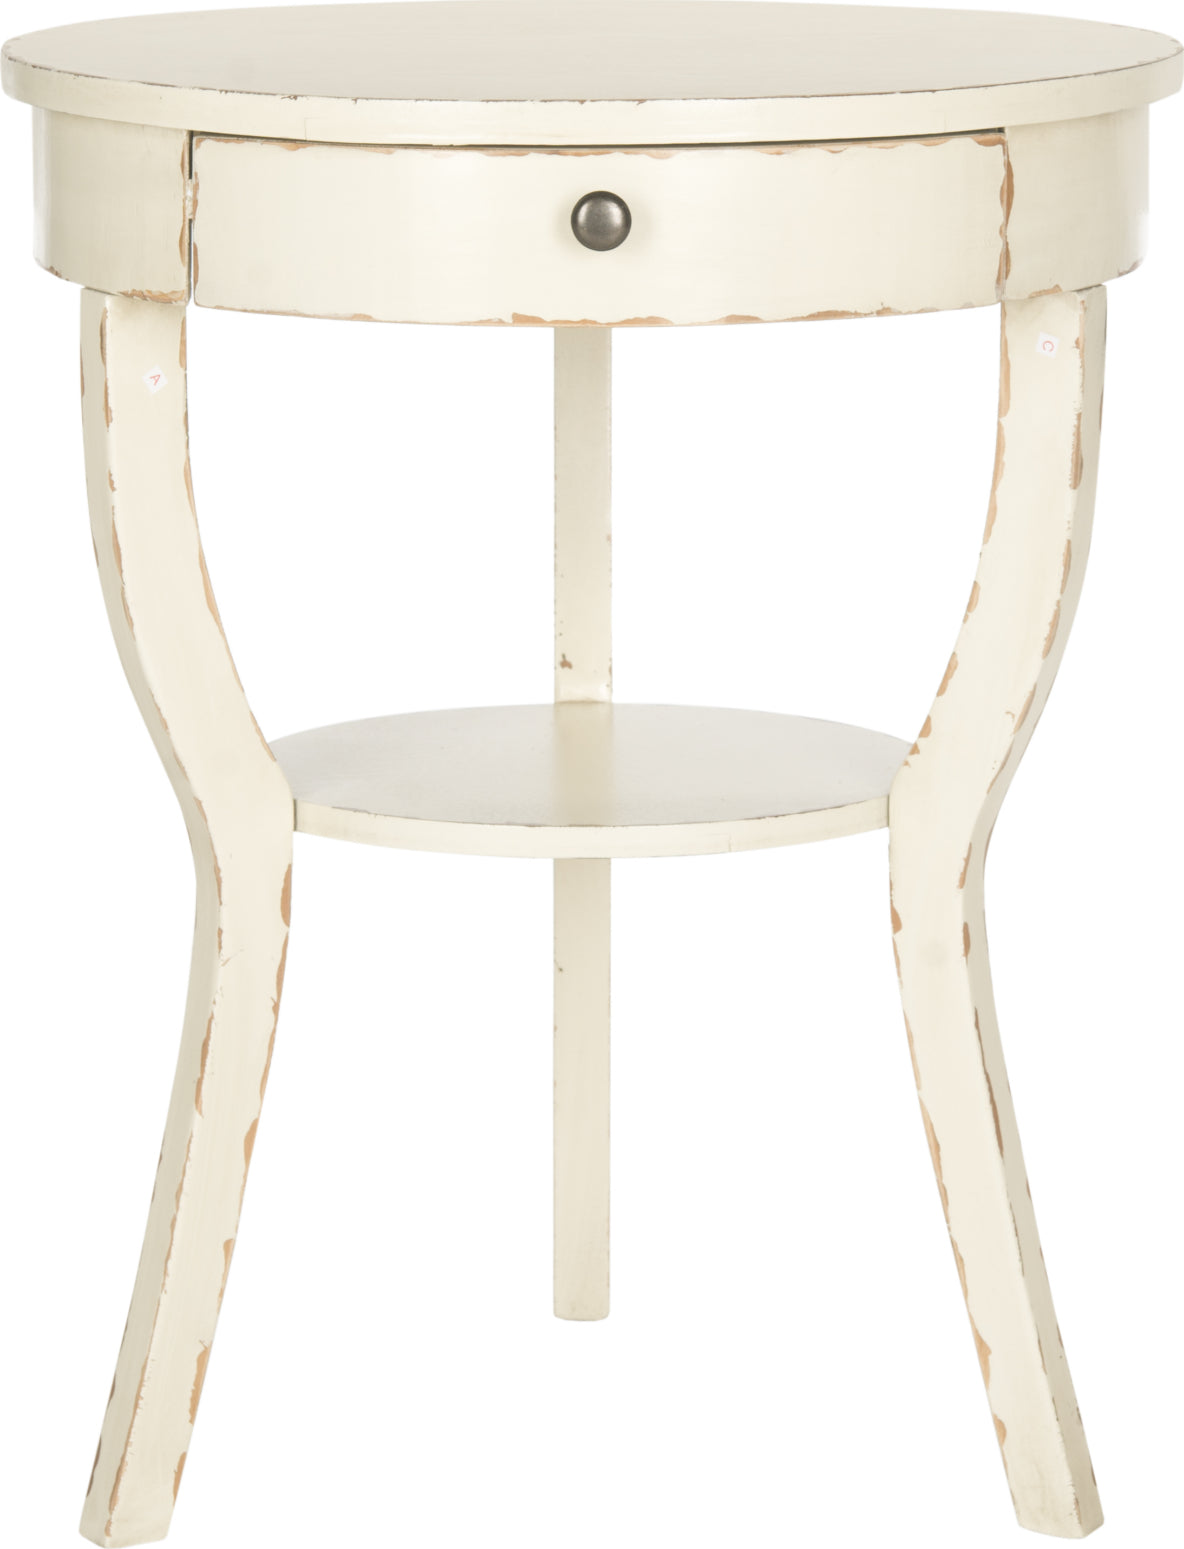 Safavieh Kendra Round Pedestal End Table With Drawer Vintage Cream Furniture main image